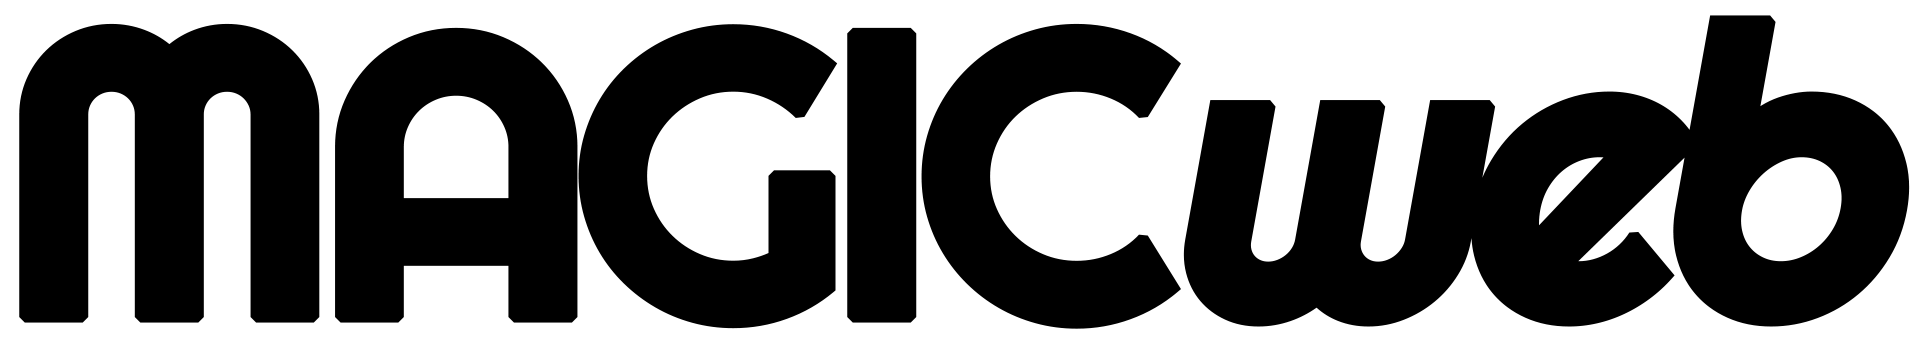 Sort Magicweb logo uden baggrund